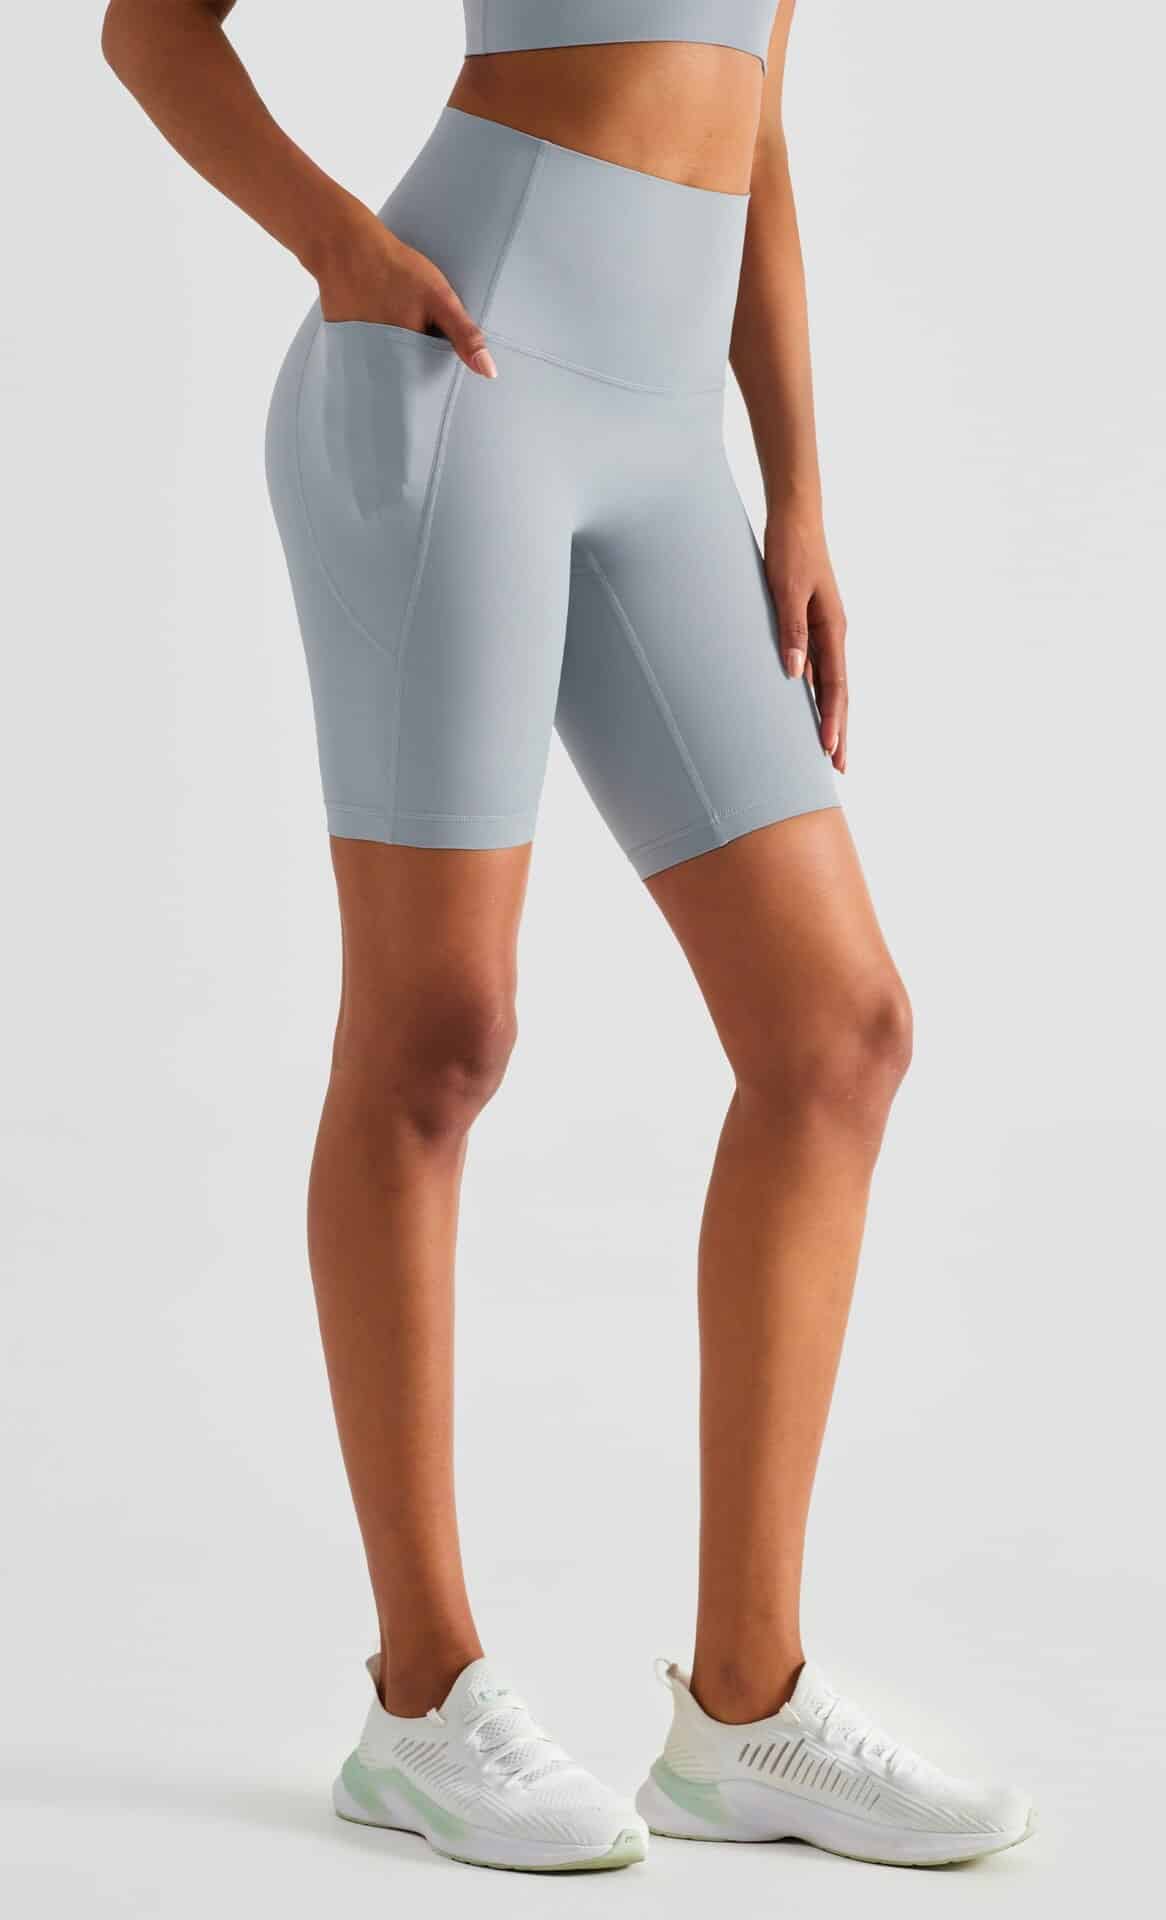 NWT High Waist Short 8" Women Biker Short Pockets Tummy Control Yoga Shorts Workout Running Sports Shorts Not Camel Seam Shorts